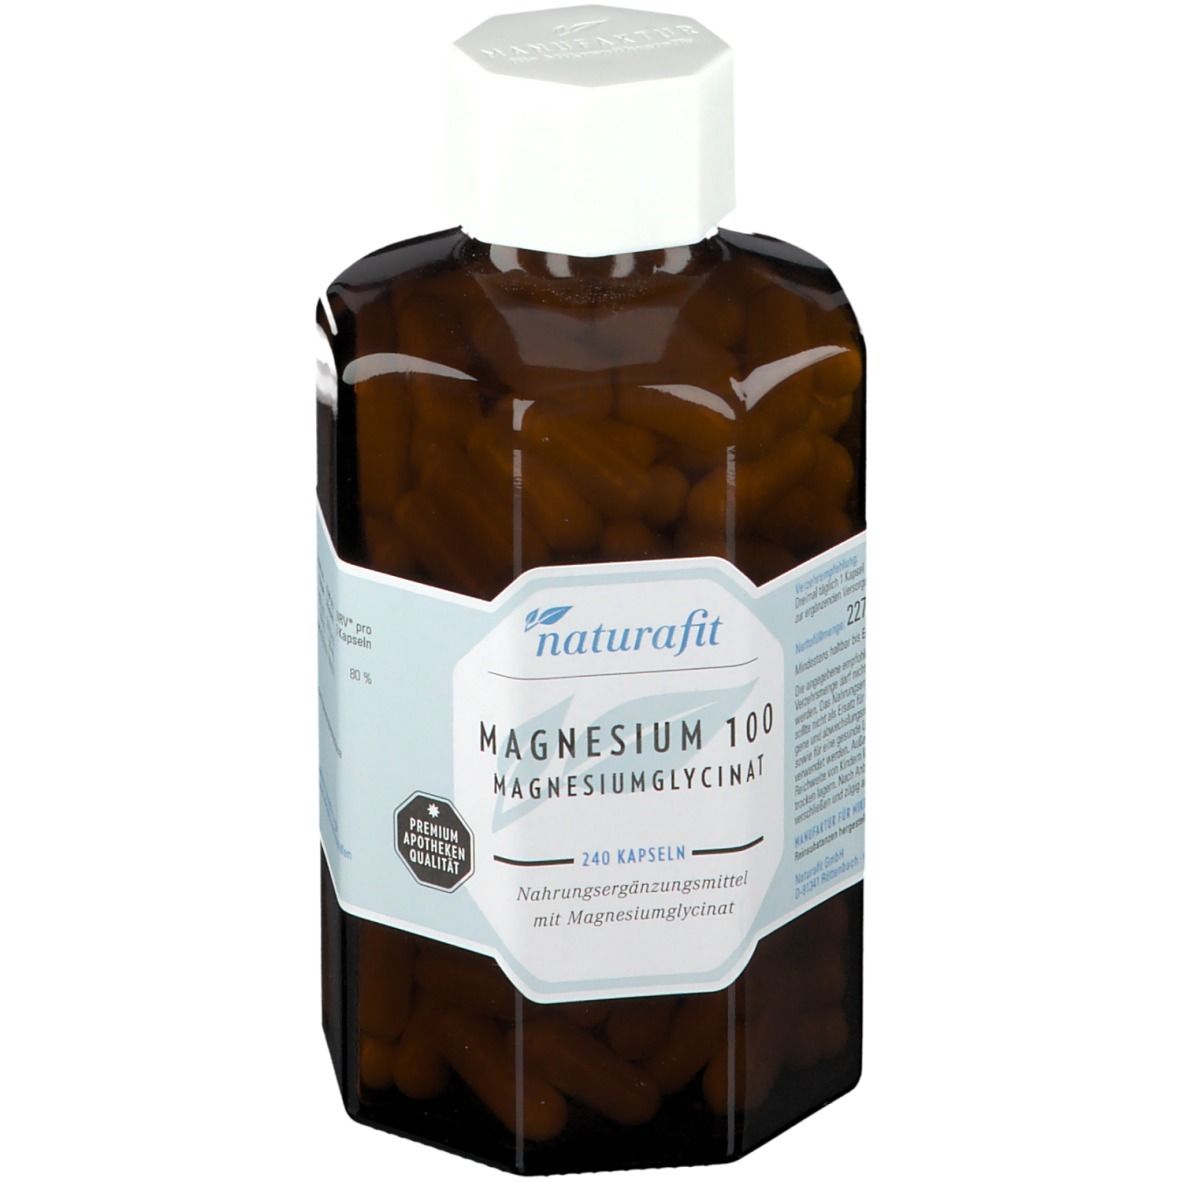 NaturaFit GmbH naturafit Magnesium 100 mg Magnesiumglycinat